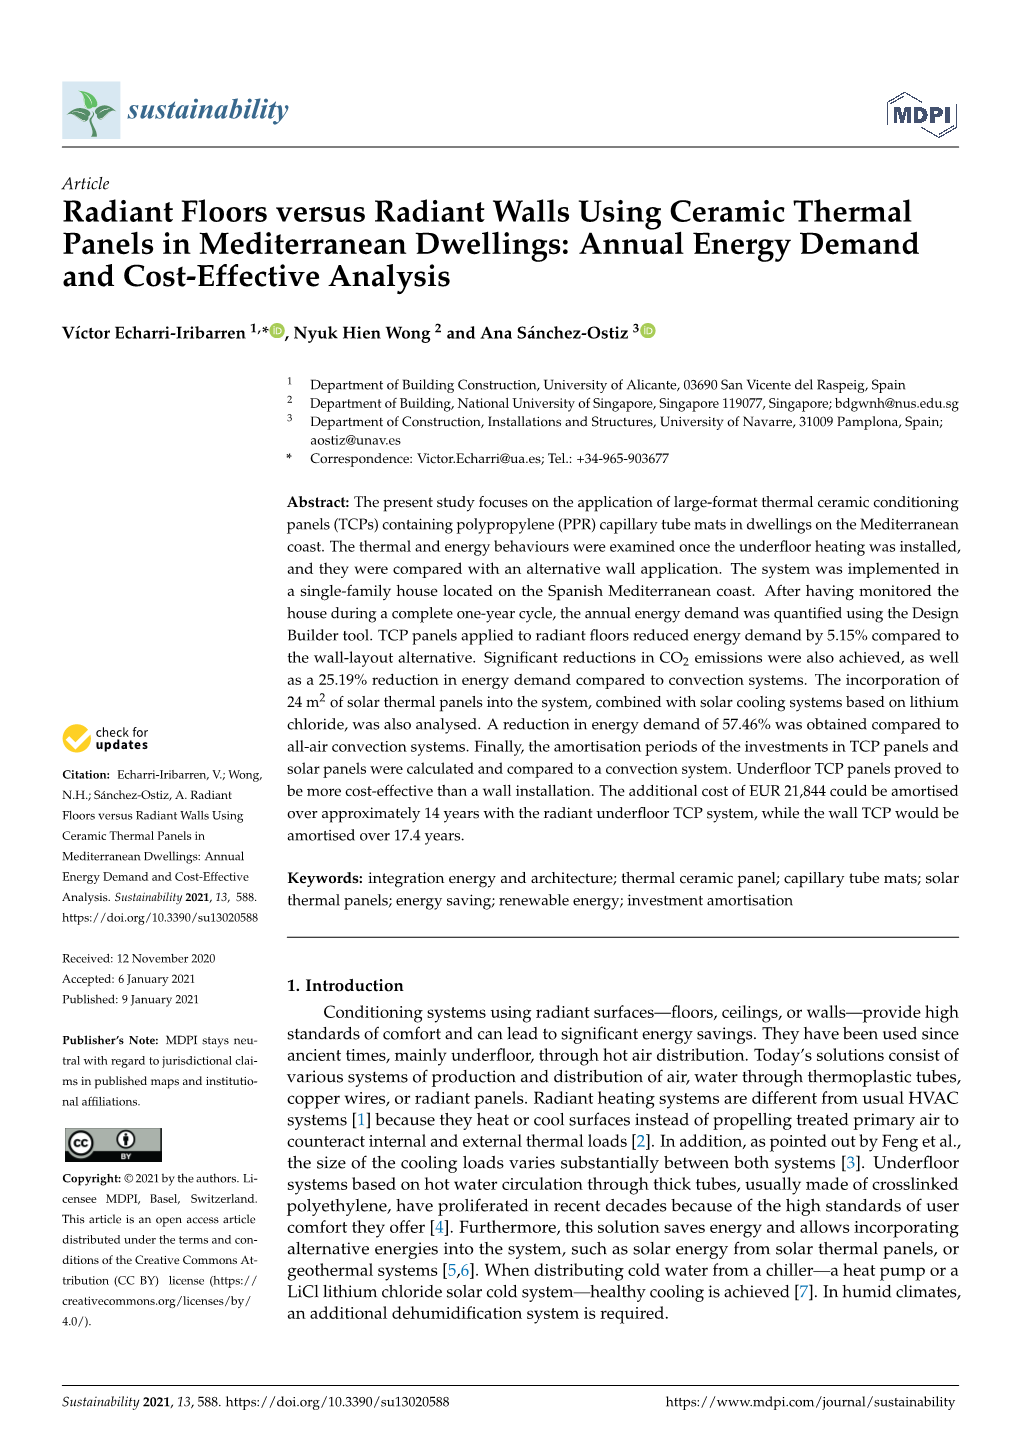 Radiant Floors Versus Radiant Walls Using Ceramic Thermal Panels in Mediterranean Dwellings: Annual Energy Demand and Cost-Effective Analysis